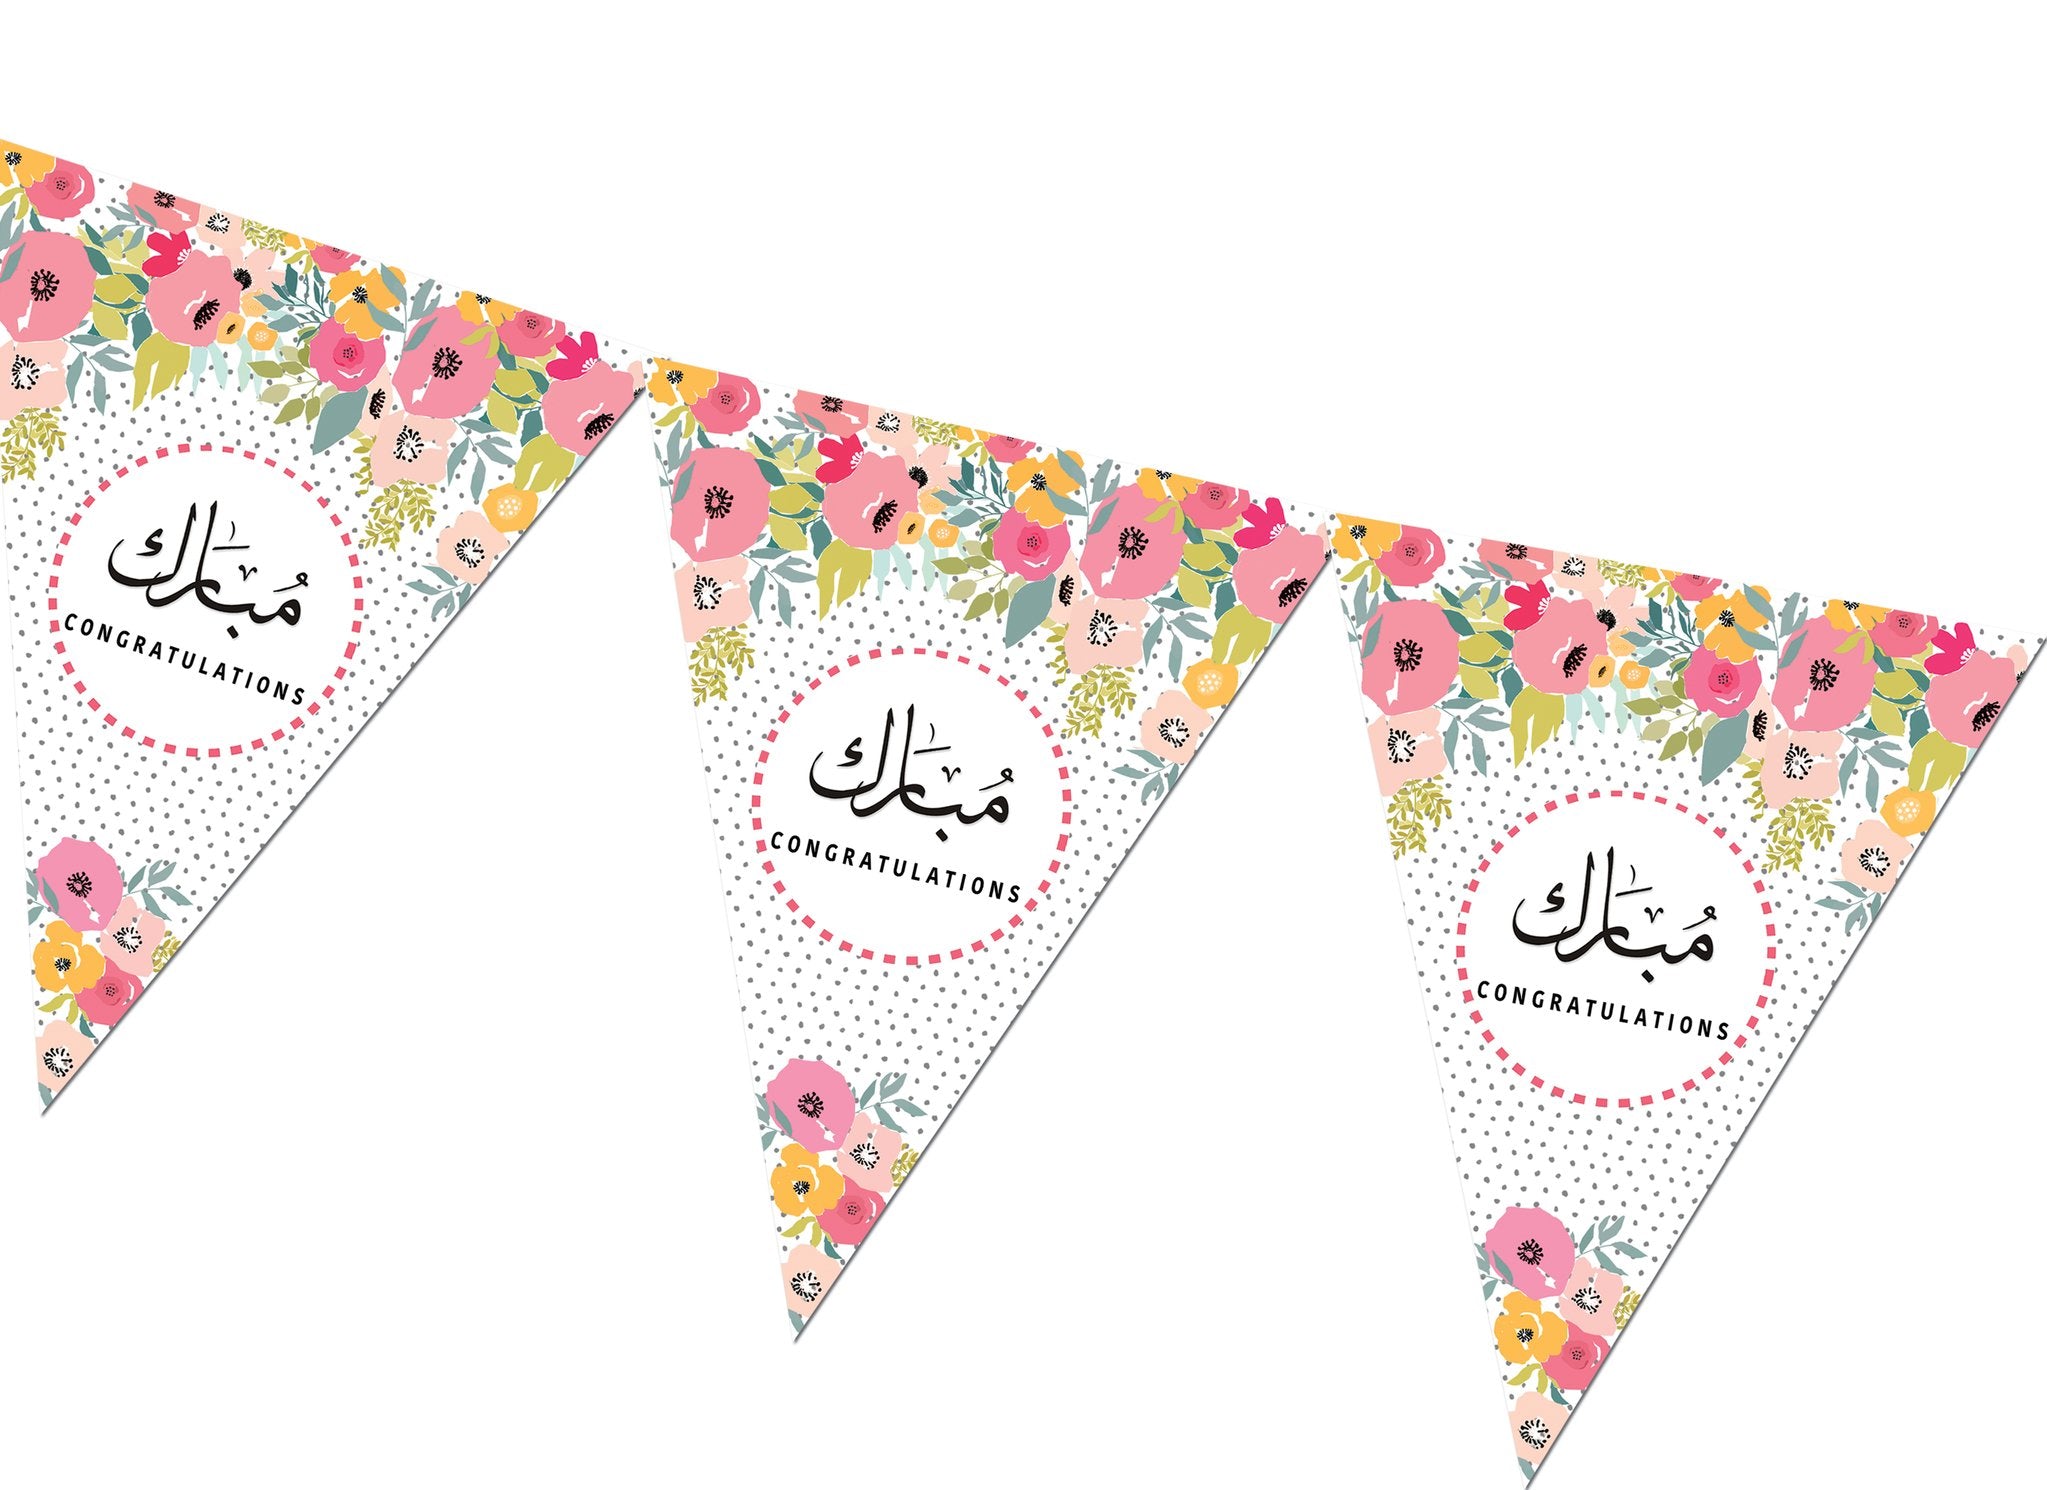 Mubarak (Congratulations) Bunting Banner